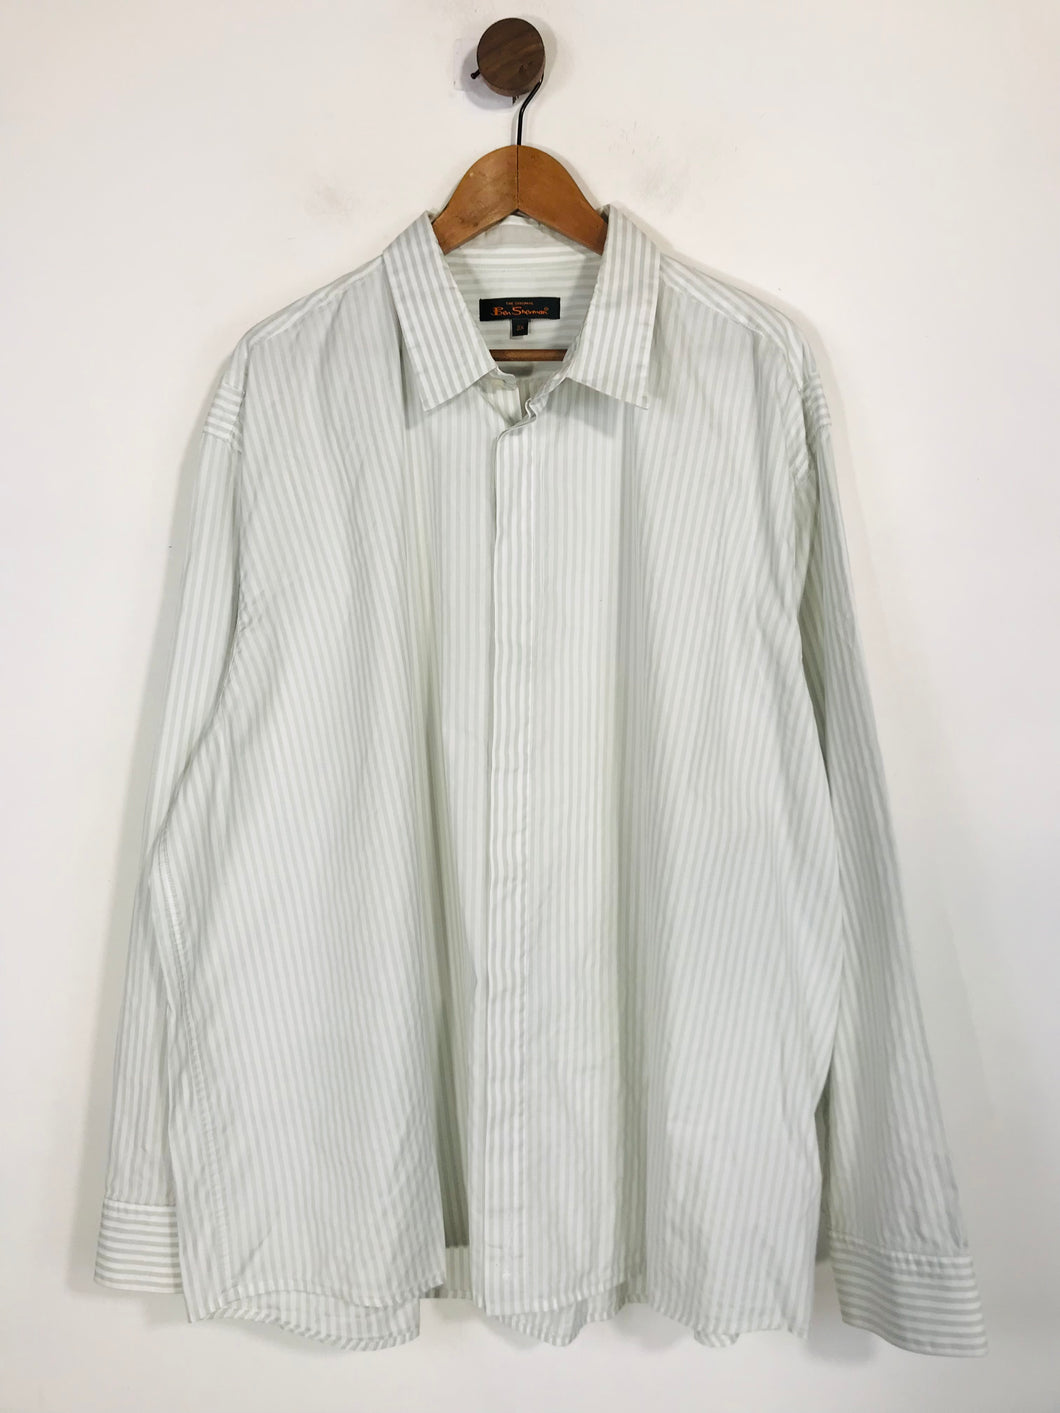 Ben Sherman Men's Cotton Striped Button-Up Shirt | 3XL | Green